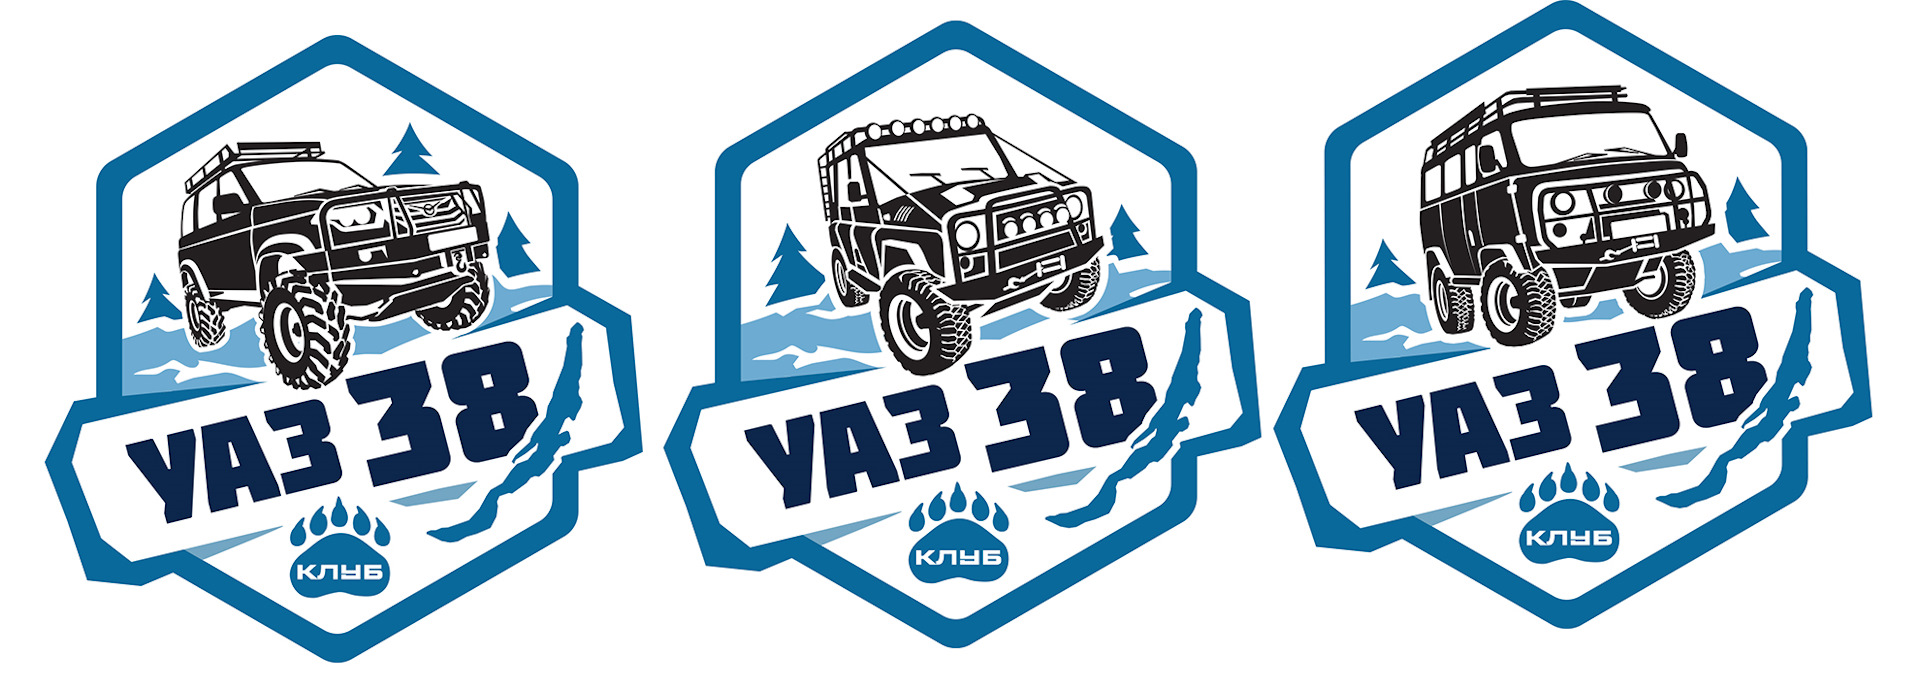 Логотип уазика. 469 УАЗ лого. Эмблема УАЗ Патриот. Наклейки на УАЗ Буханка 4х4. Логотип УАЗ Патриот в векторе.